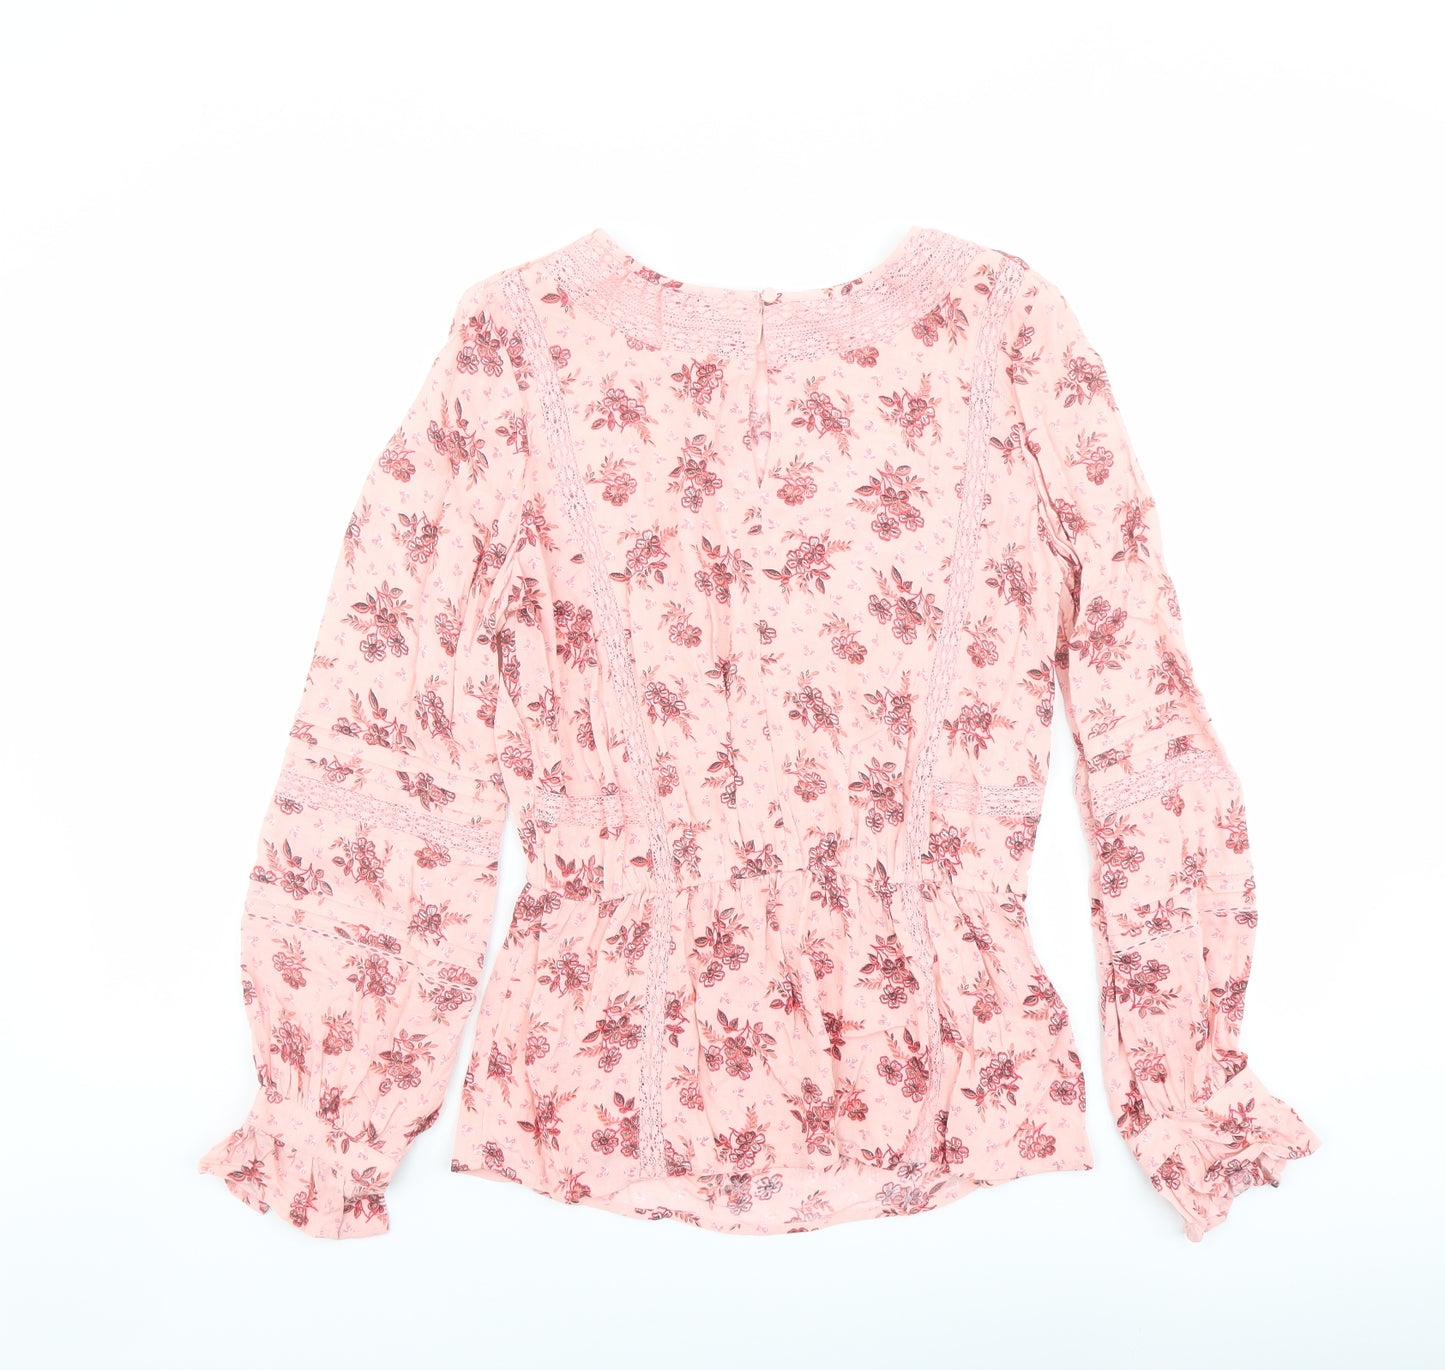 Per Una Womens Pink Floral Viscose Basic Blouse Size 8 Boat Neck - Lace Detail